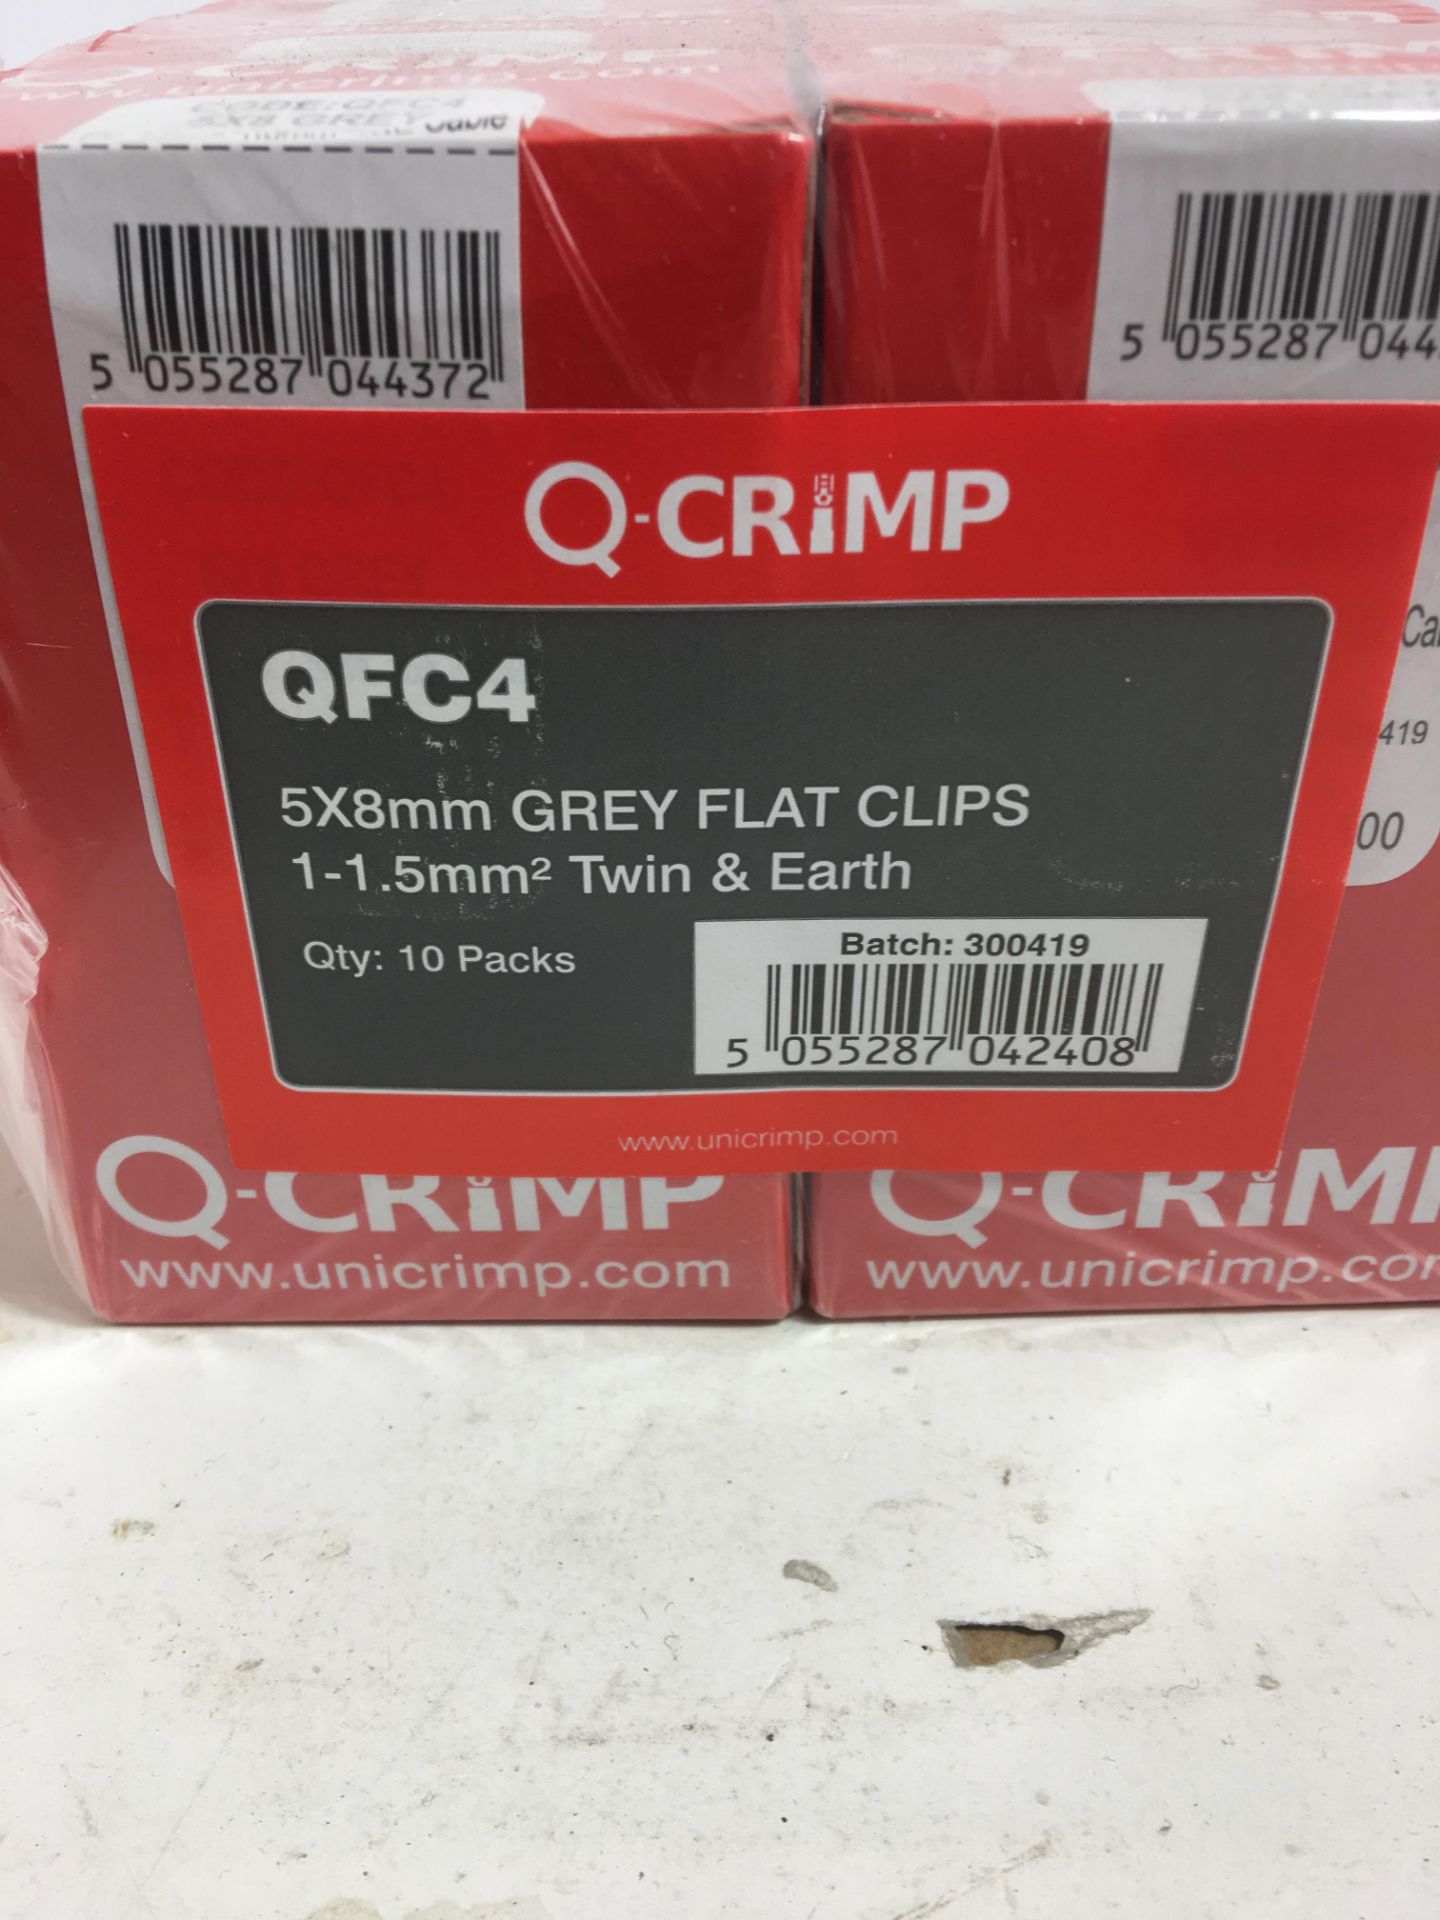 10 Packs - Q-Crimp 5x8mm Grey Flat Clips - Image 3 of 3